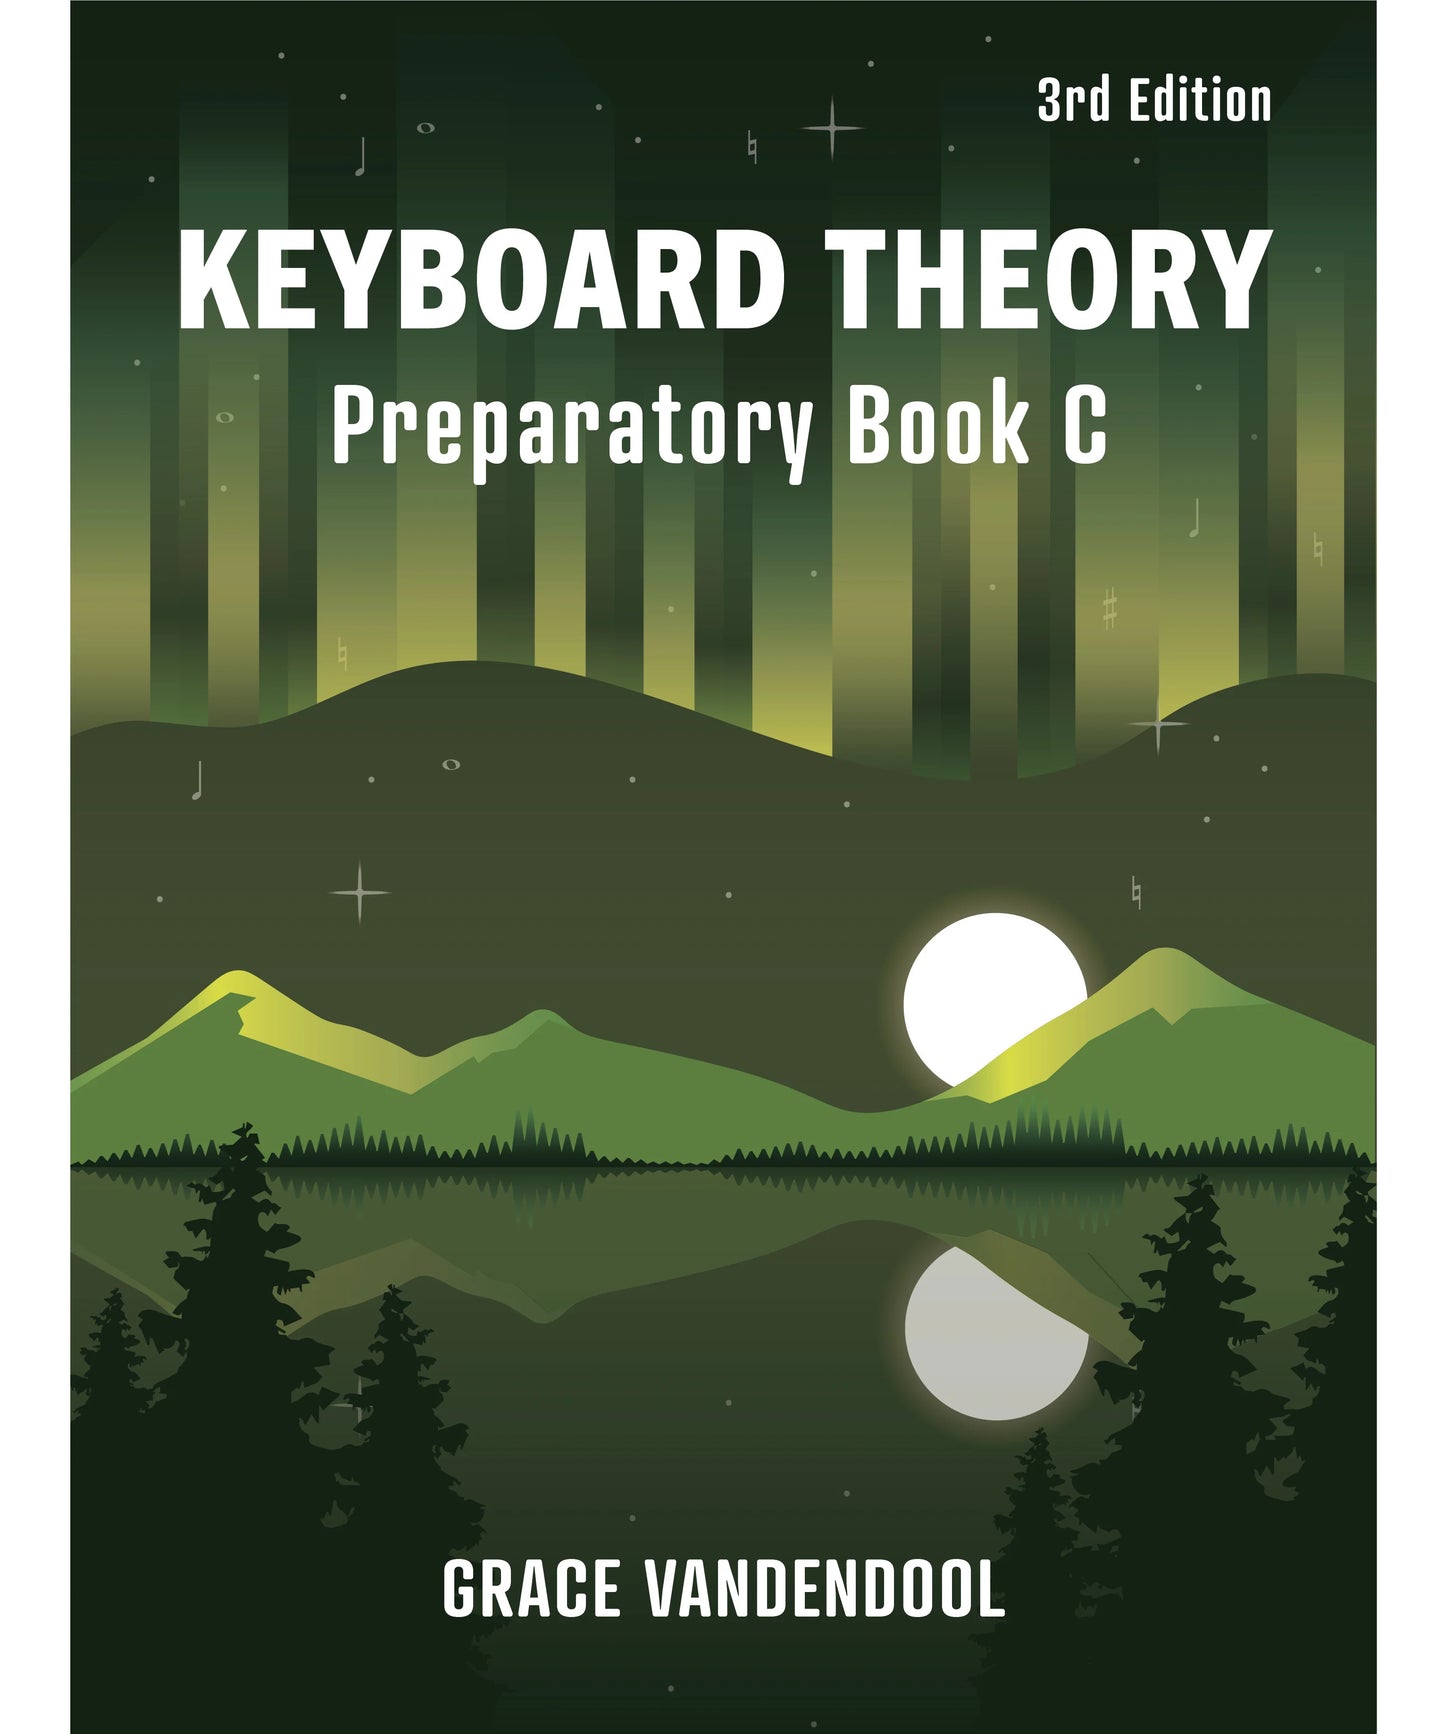 Grace Vandendool - Keyboard Theory Preparatory Series, 2nd Edition - Book C